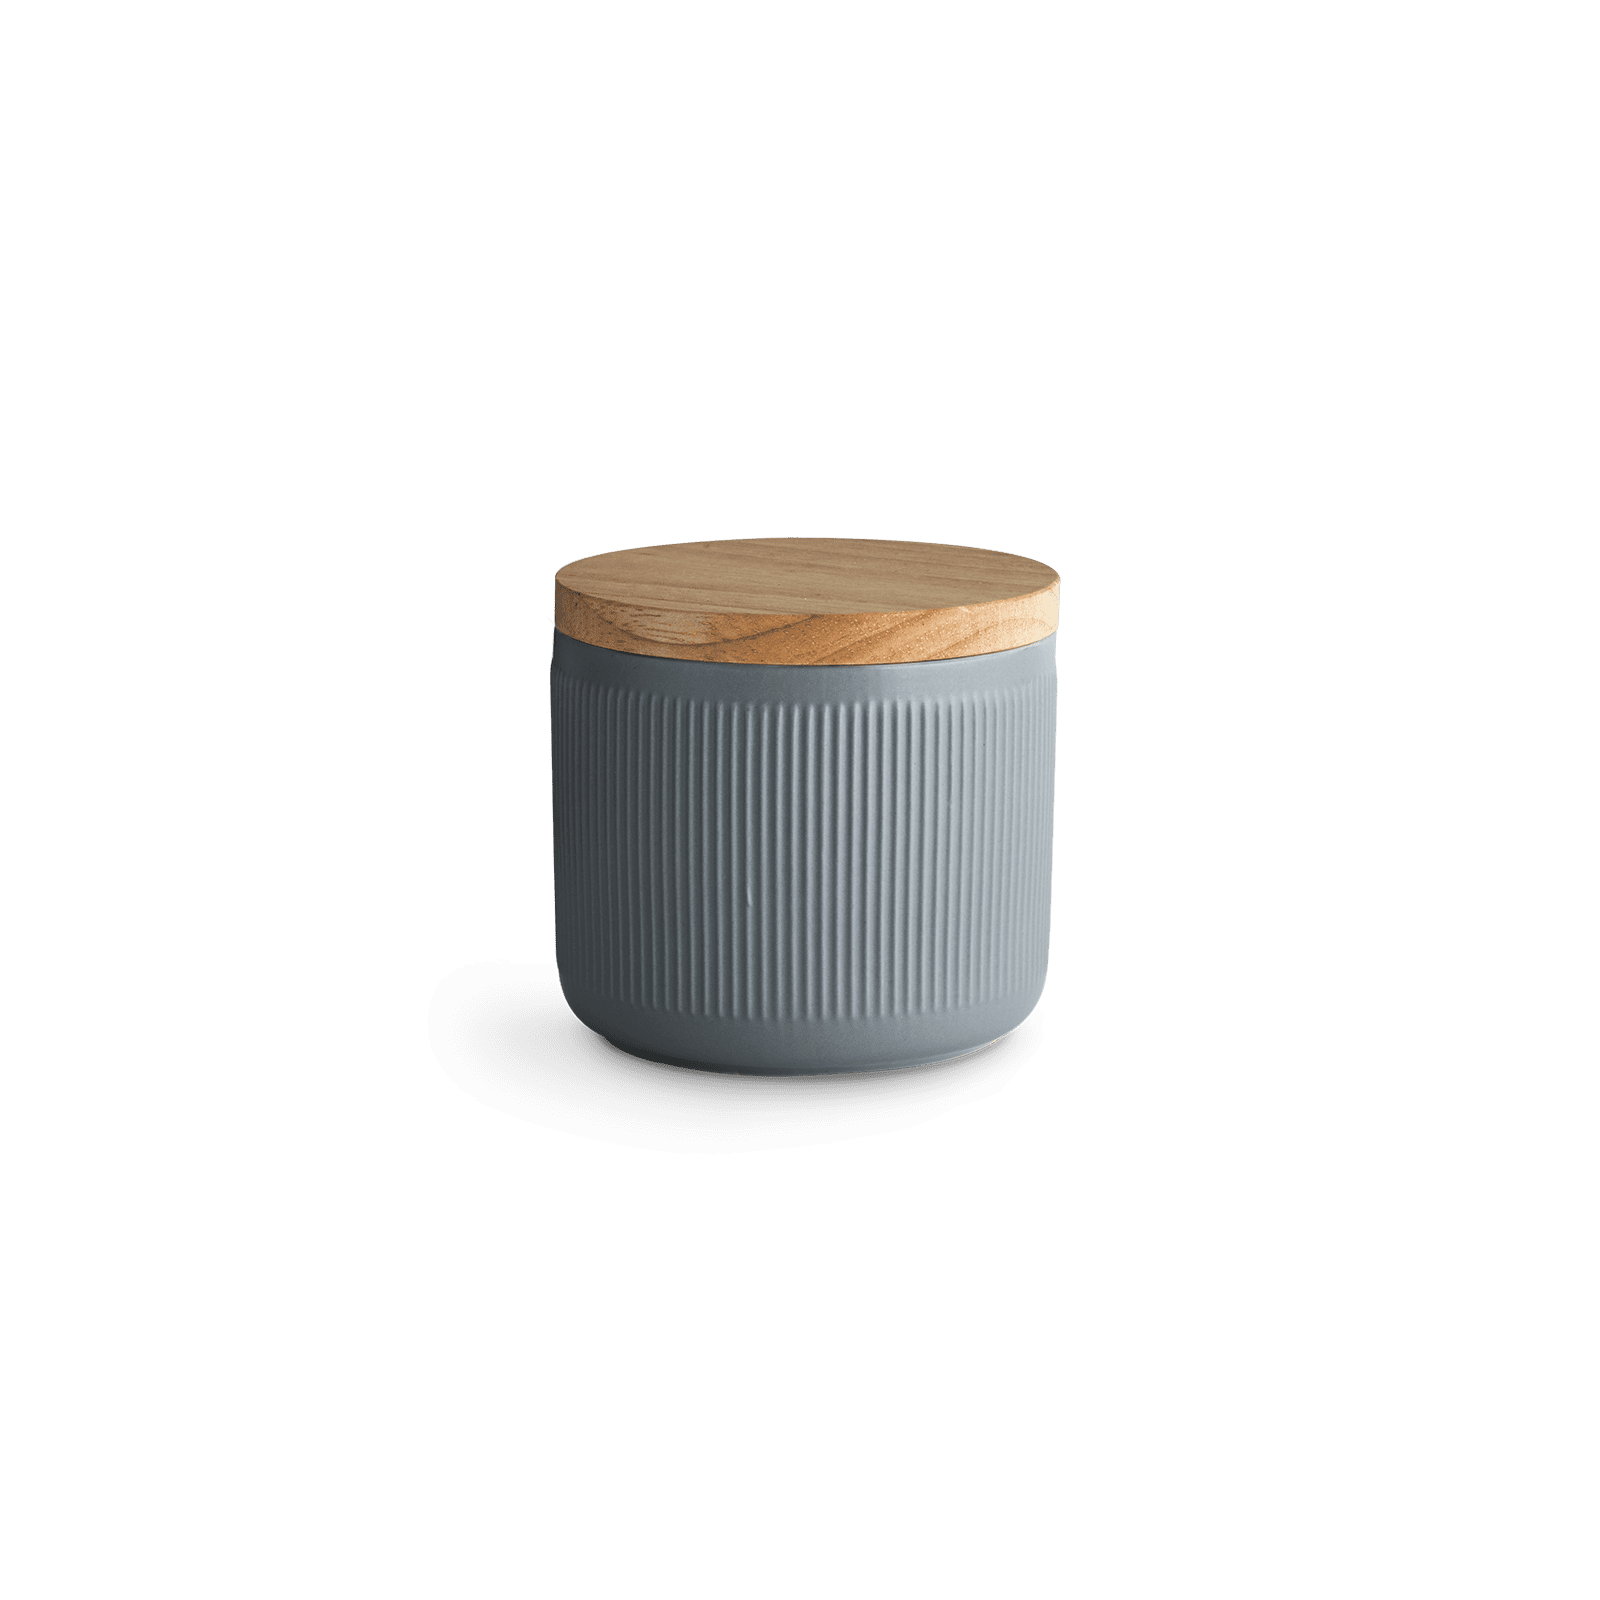 Keramik Vorratsdosen Stripes mit Holzdeckel - 10,1 x 9,3 cm - dunkelgrau